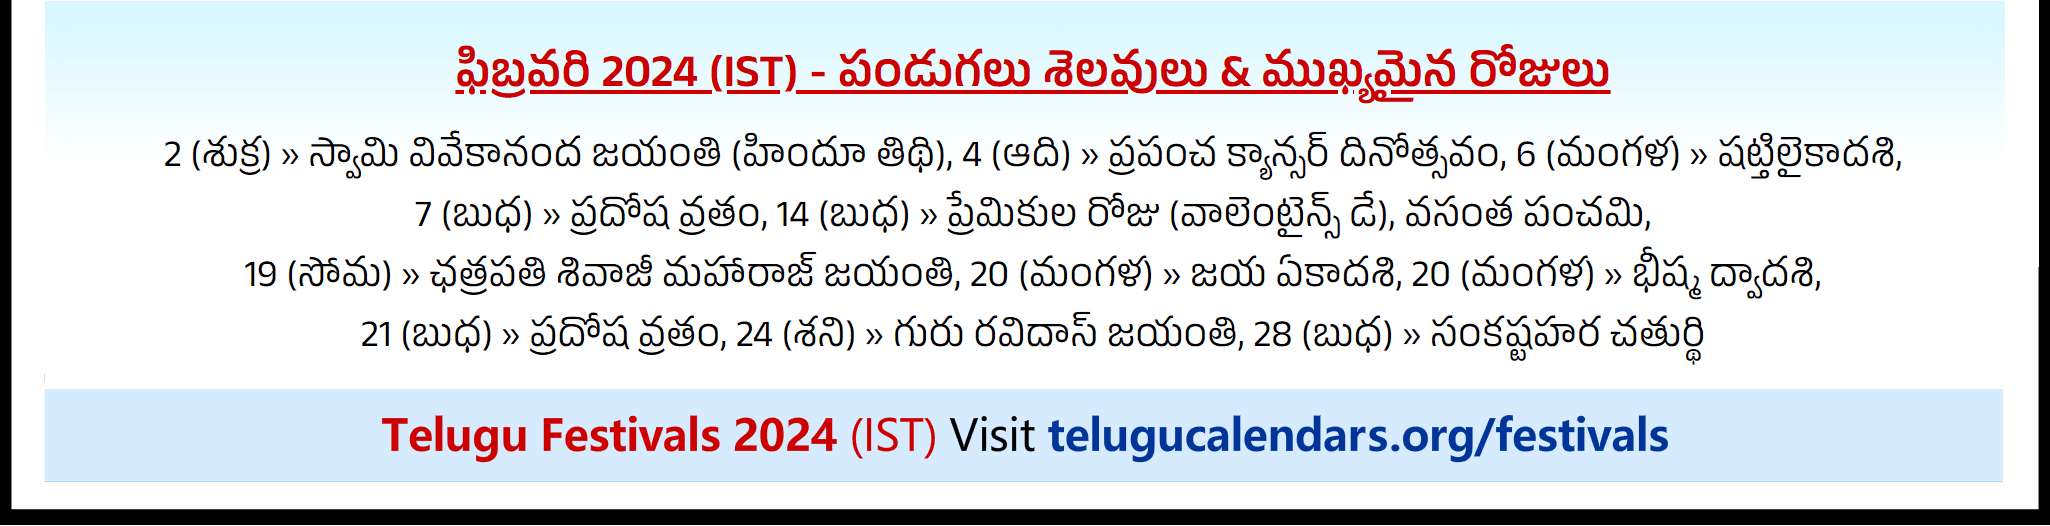 Telugu Festivals 2024 February Singapore